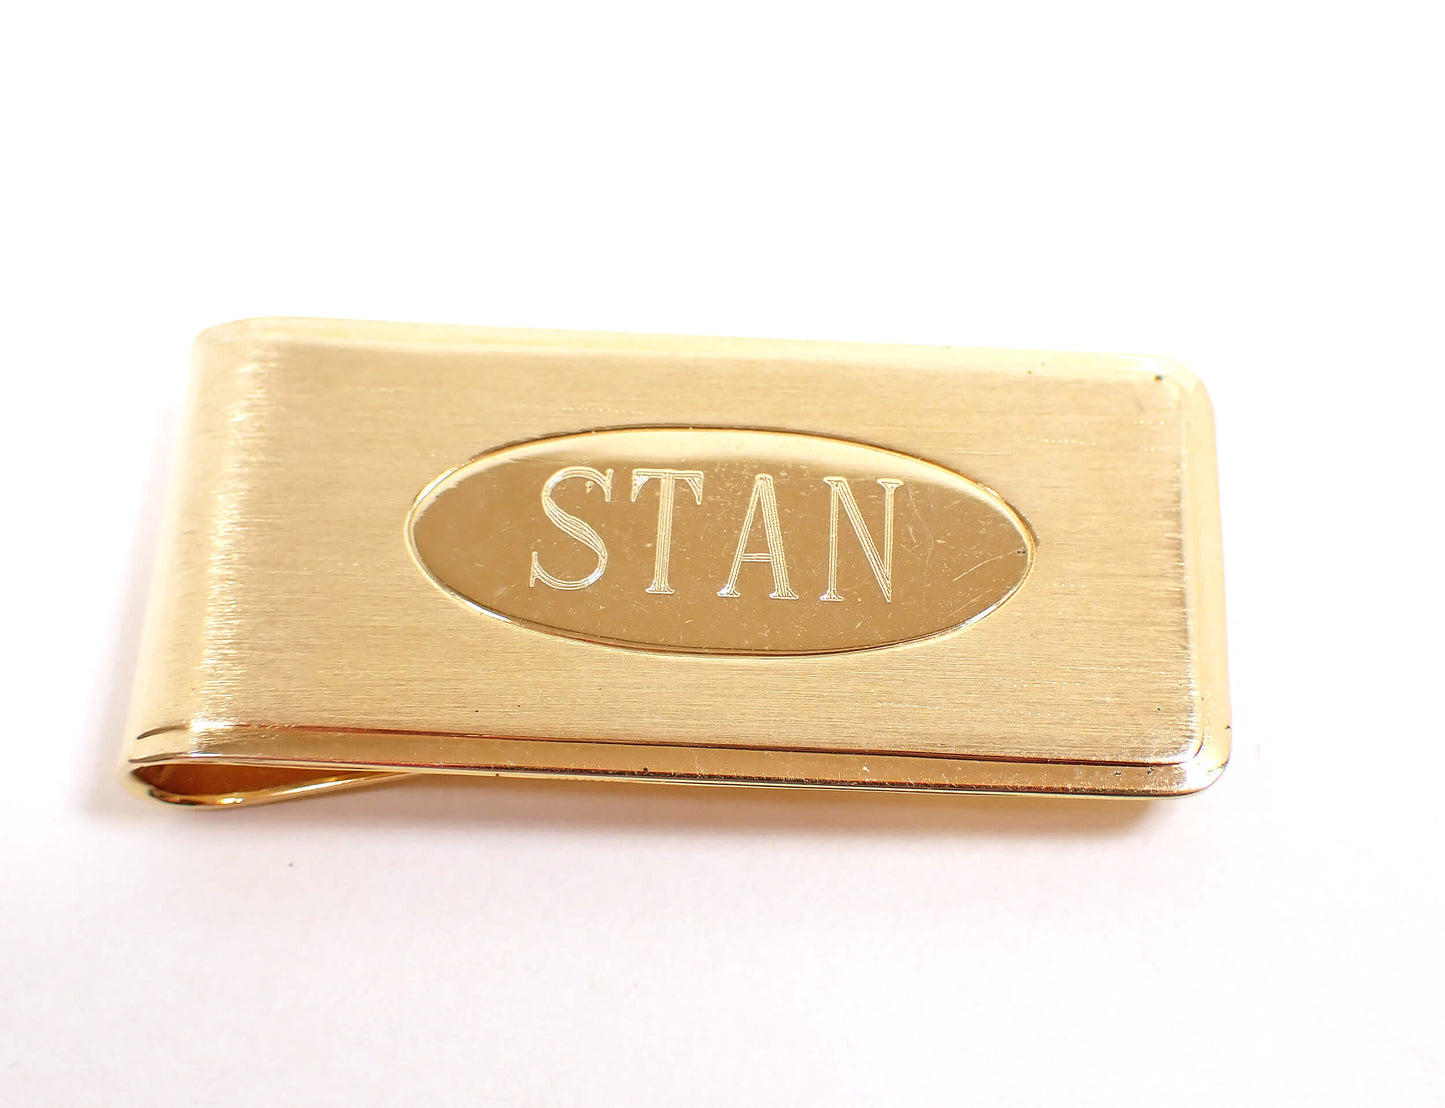 Name Stan Engraved Retro Vintage Money Clip